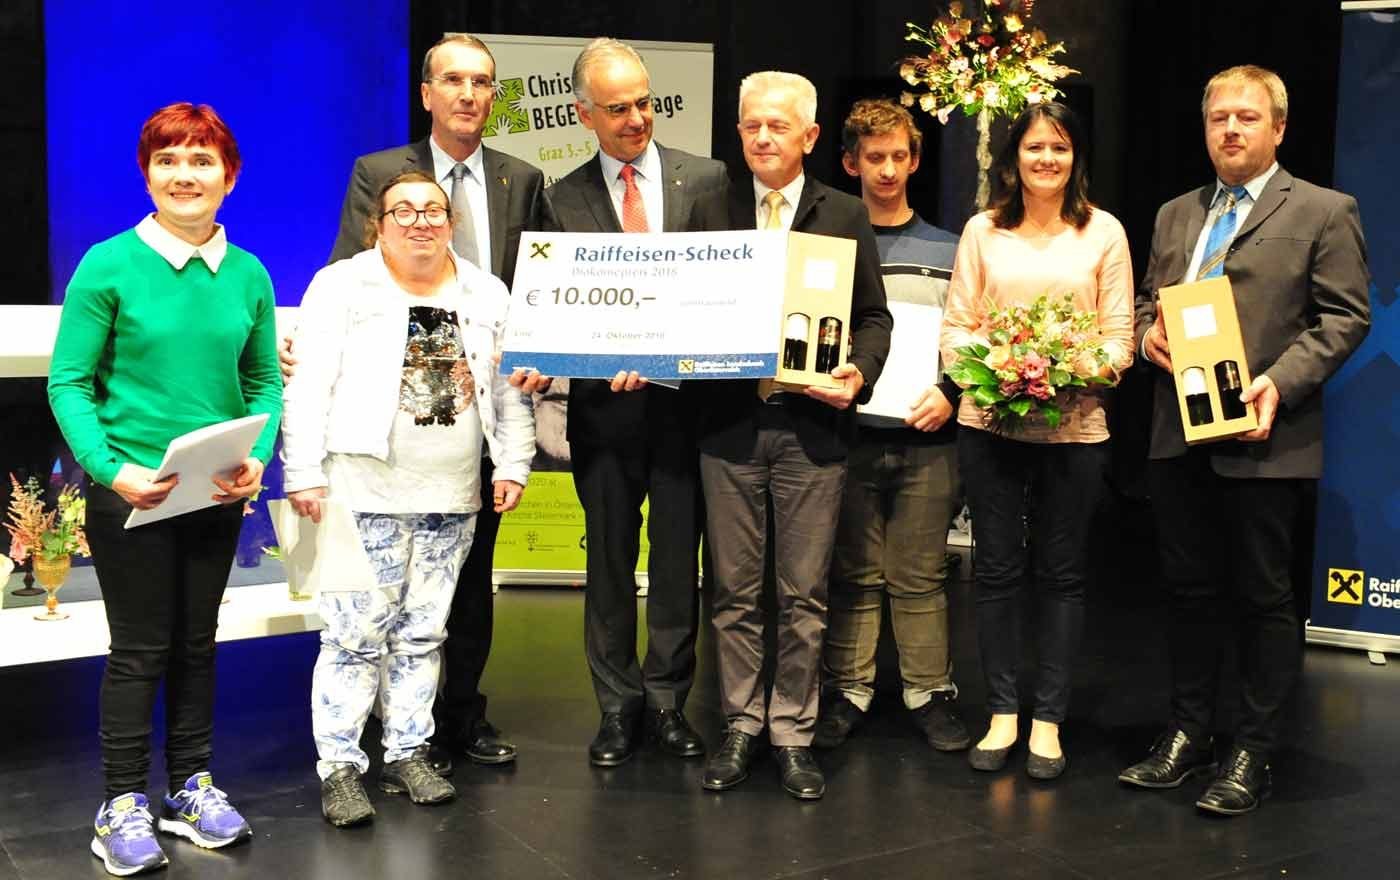 Diakoniepreisträger 2018: Das Café-Projekt "Kowalski" des Diakoniewerks Gallneukirchen. Foto: epd/Uschmann